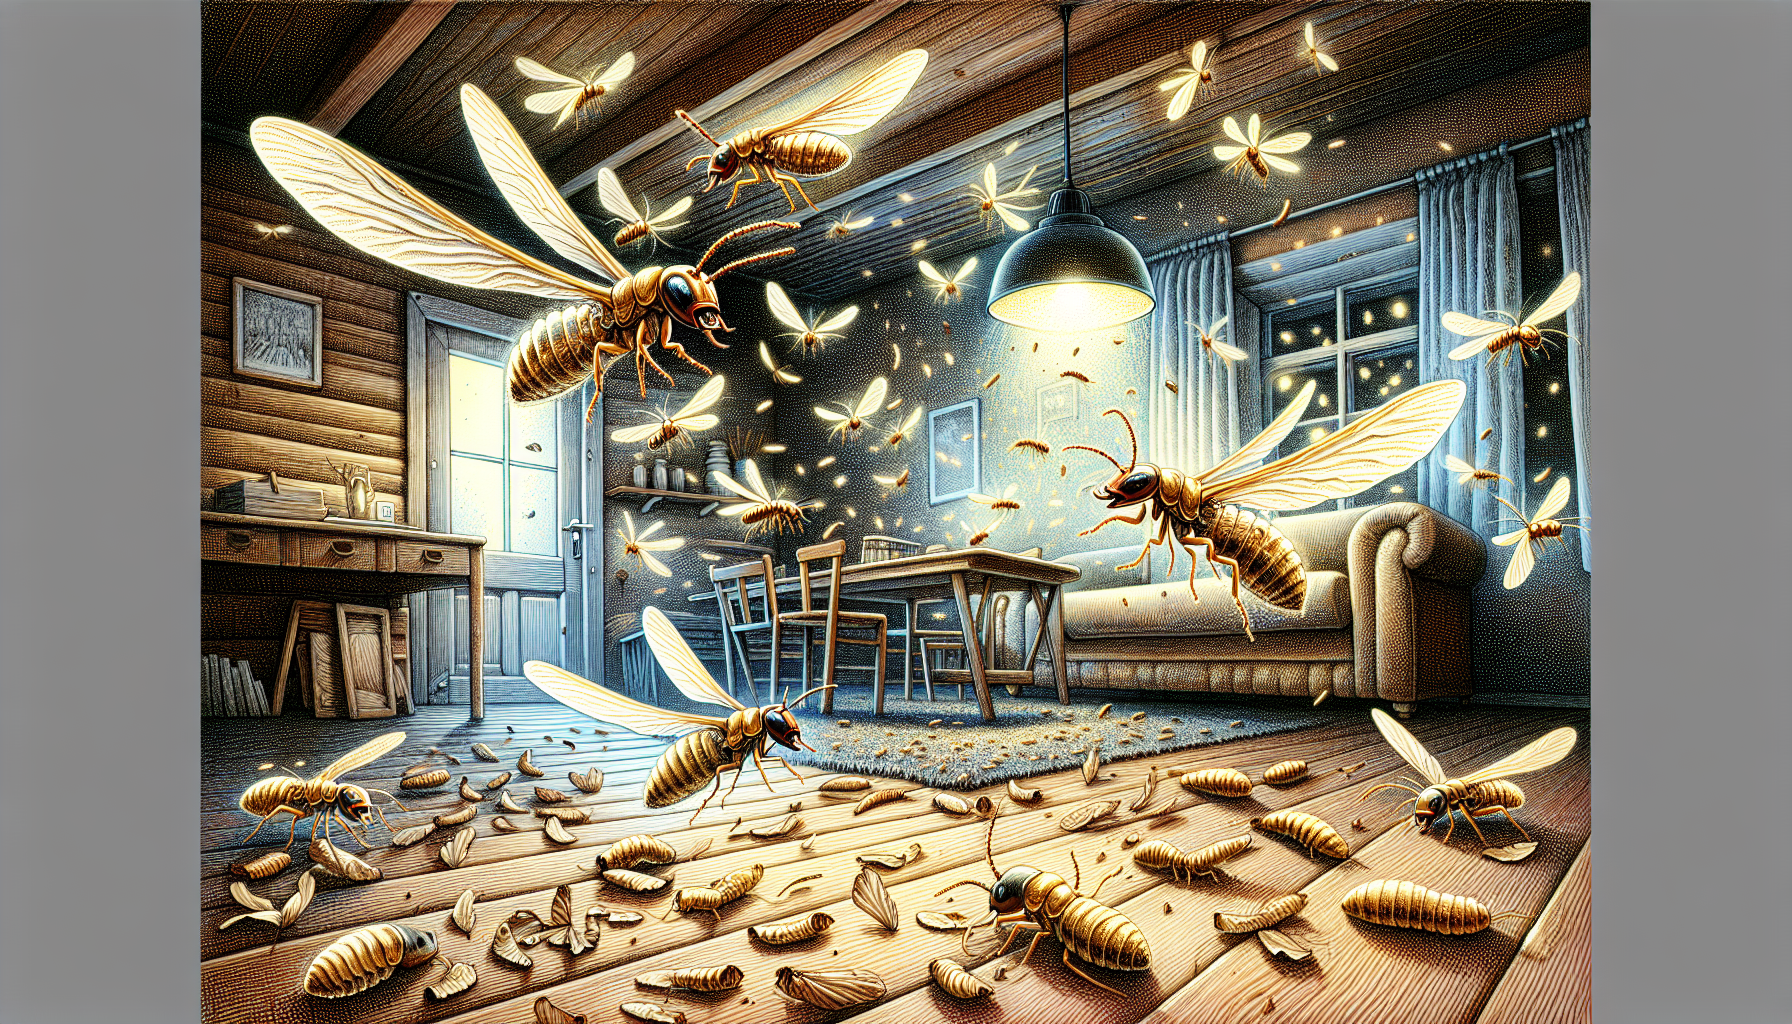 Illustration of active termite infestation